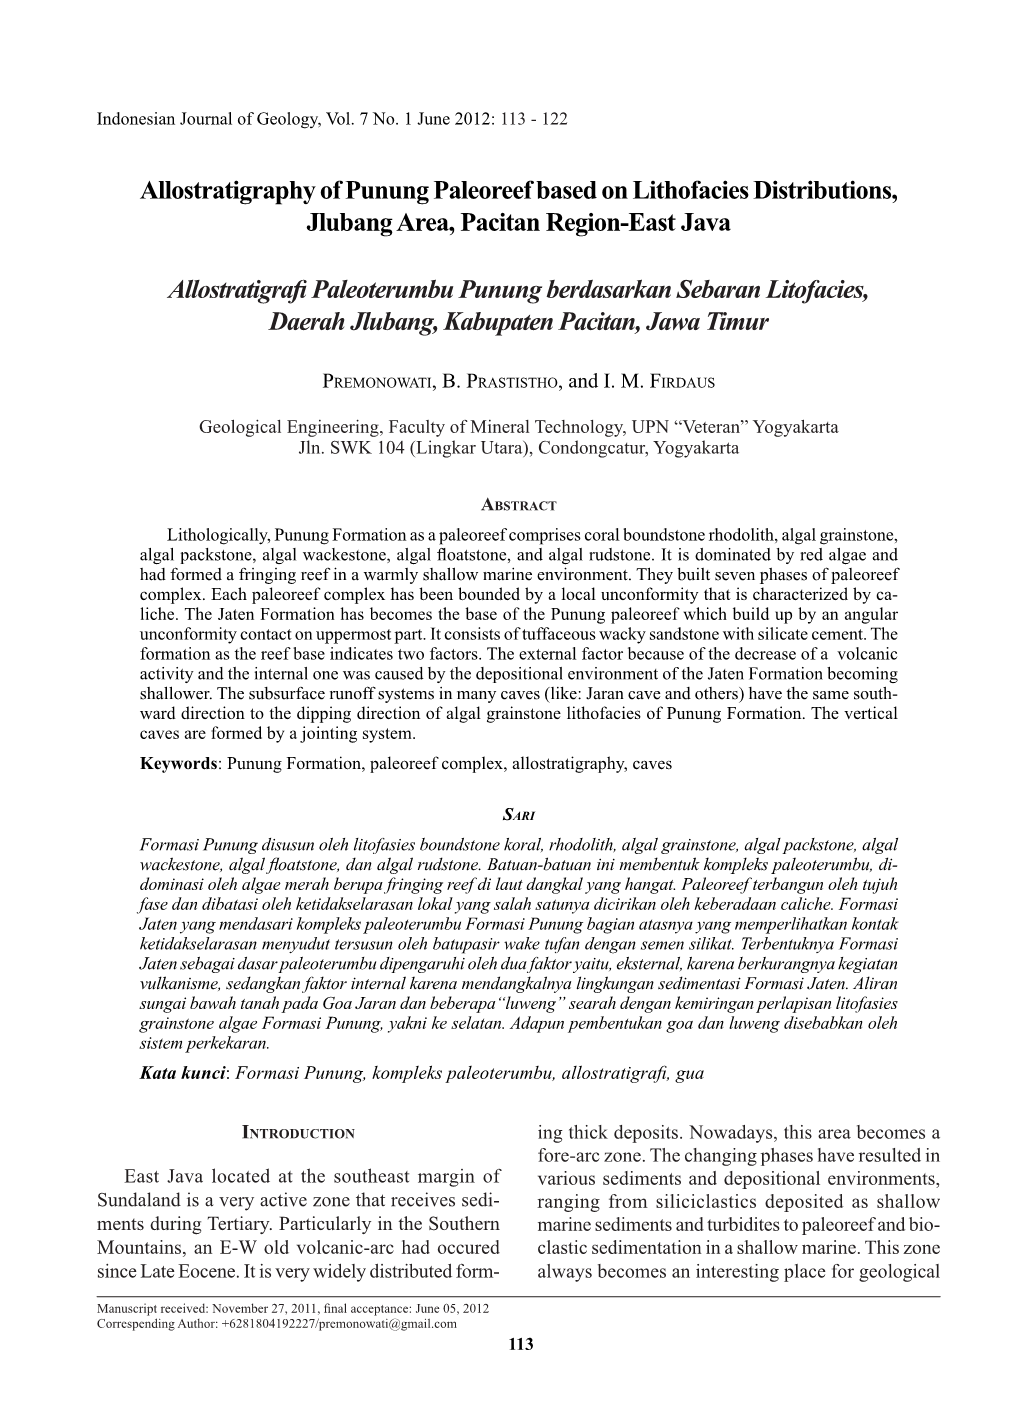 Allostratigraphy of Punung Paleoreef Based on Lithofacies Distributions, Jlubang Area, Pacitan Region-East Java